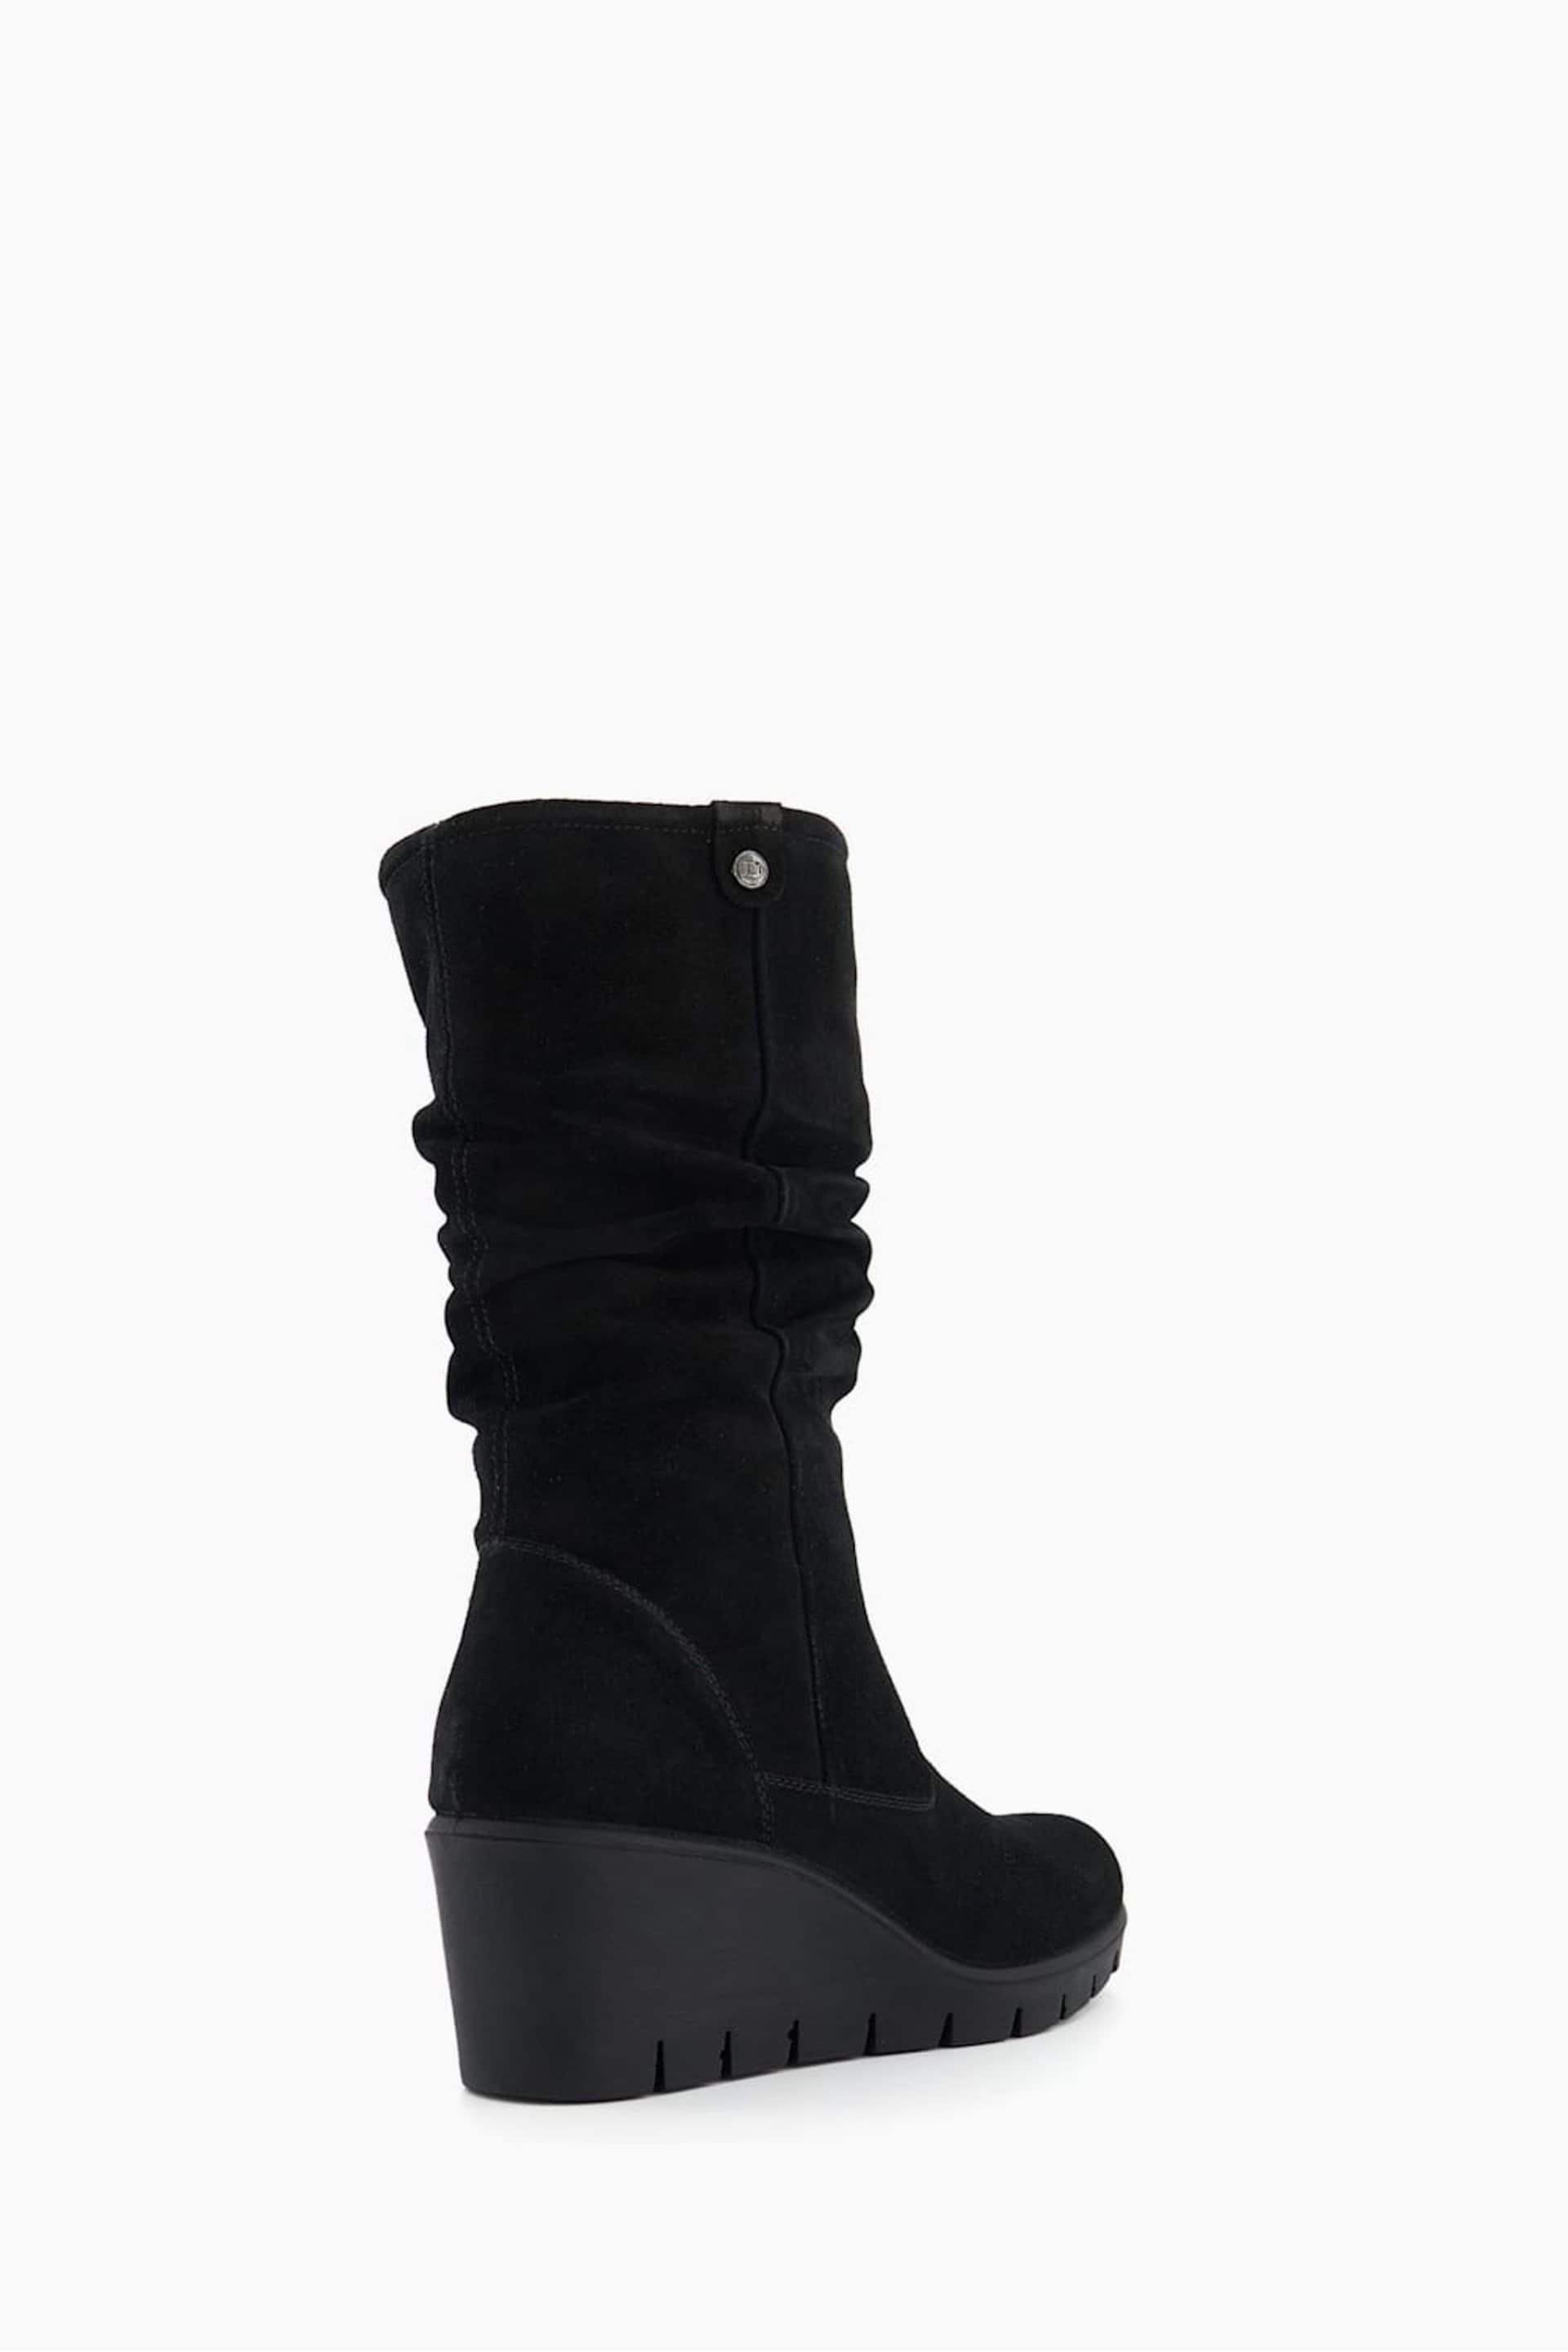 Dune London Black Ruched Tasha Wedge Comfort Boots - Image 4 of 5